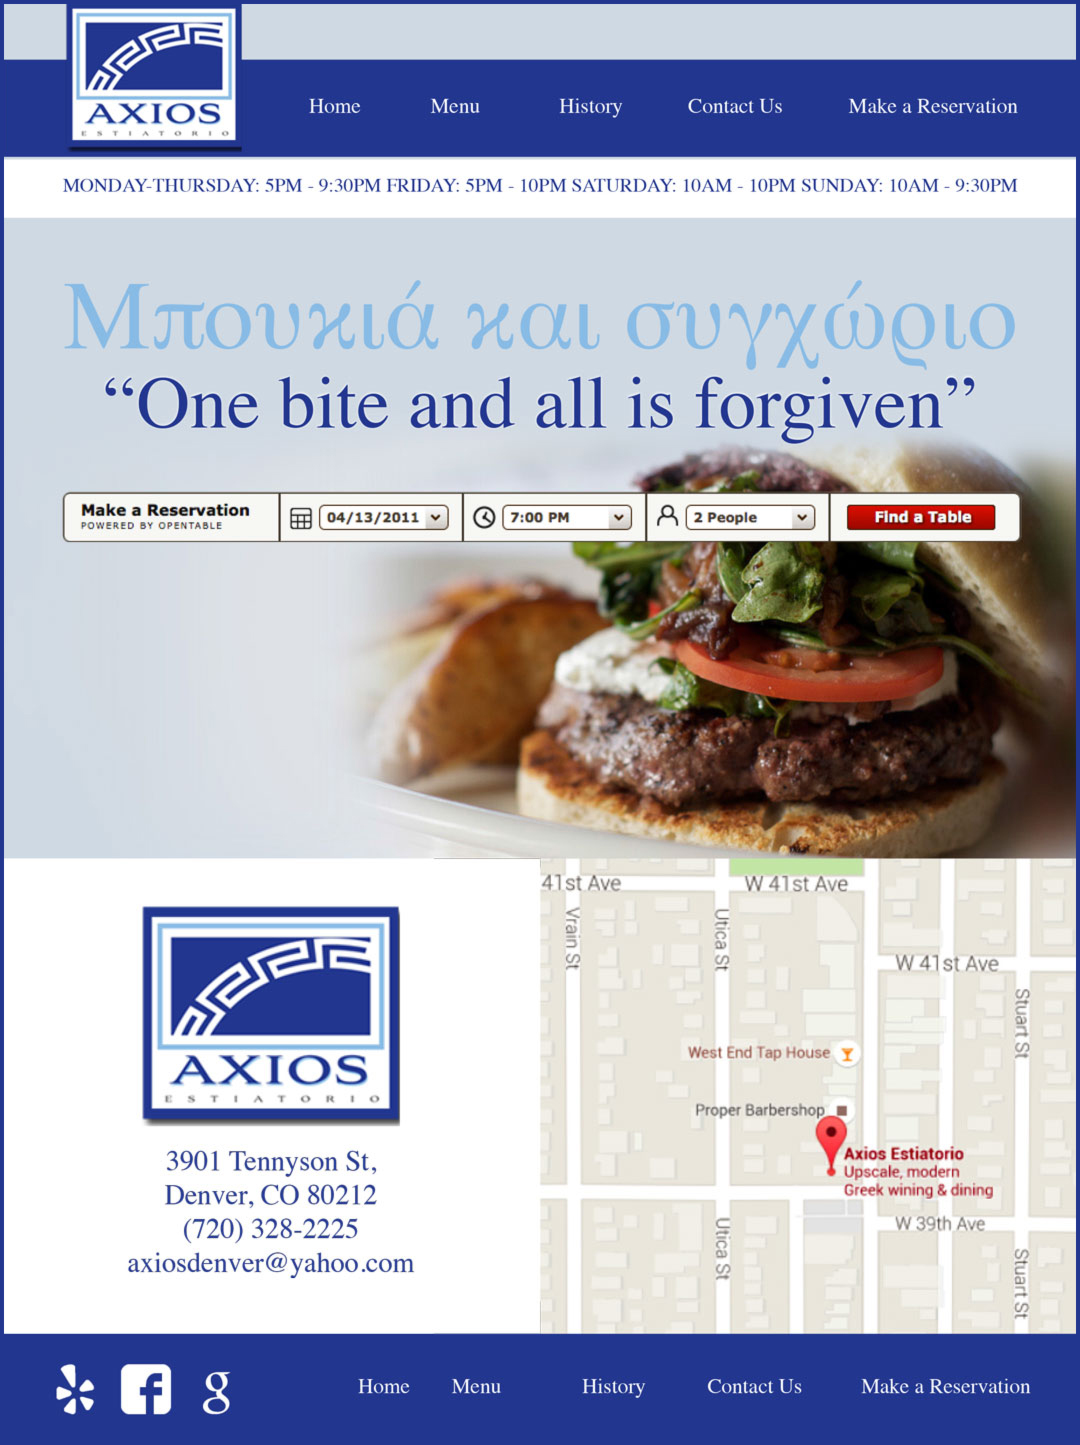 make-a-reservation-axios-denver